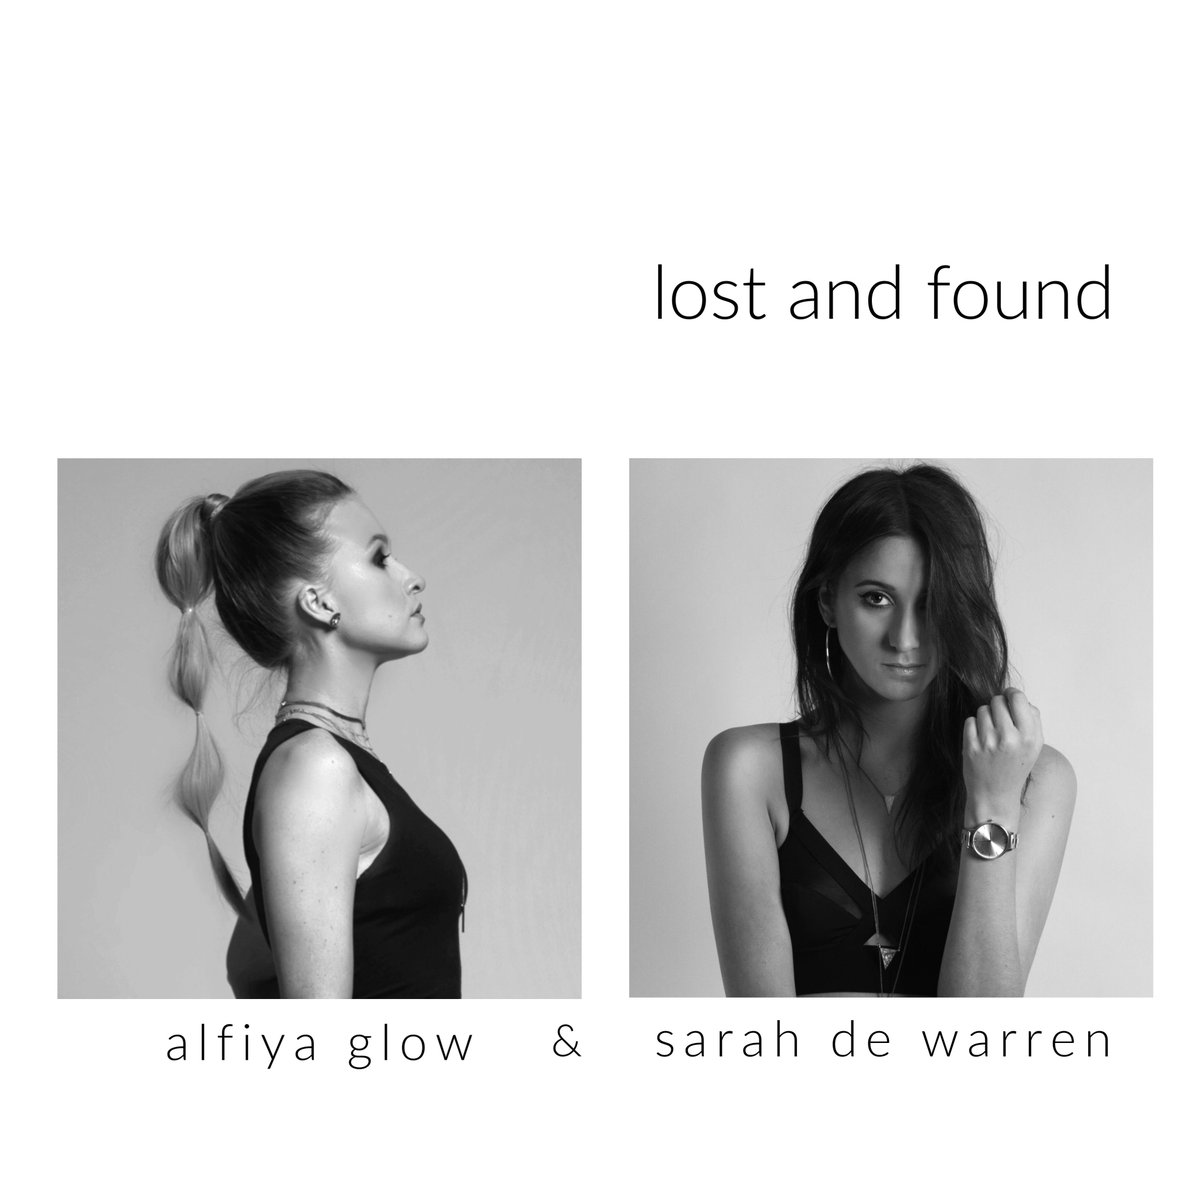 Alfiya Glow & Sarah De Warren Drop New Track “Lost and Found” Check it out: buff.ly/39tkDhk @sarahdewarren @AlfiyaGlow